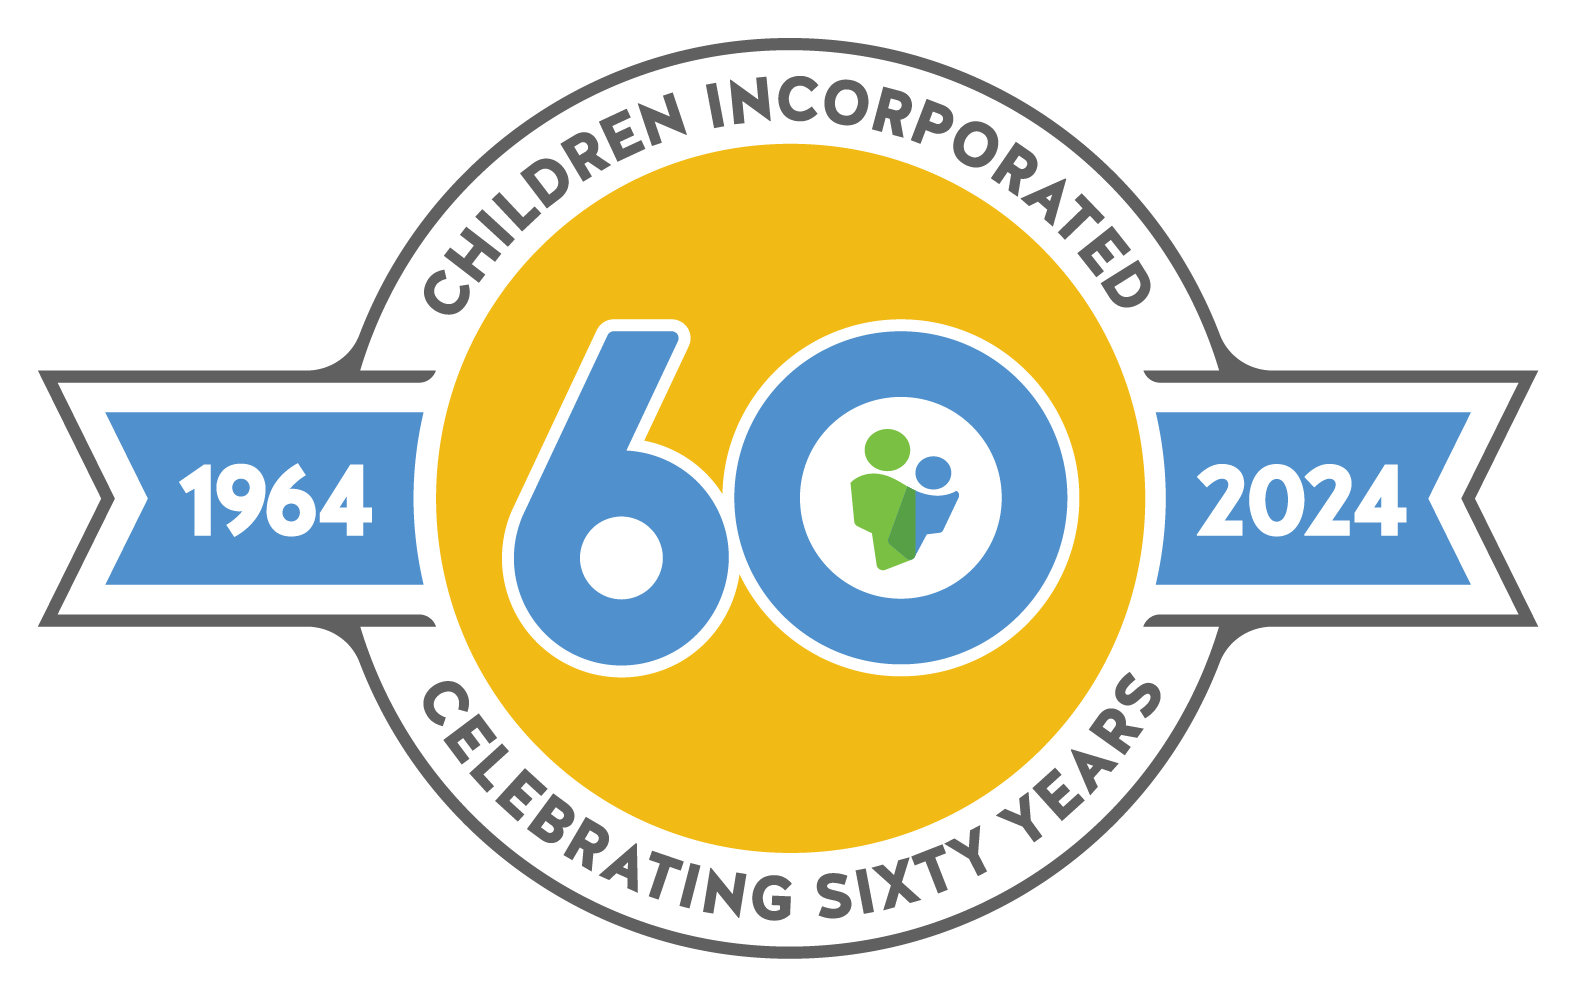 Children Incorporated 60th Anniversary Logo